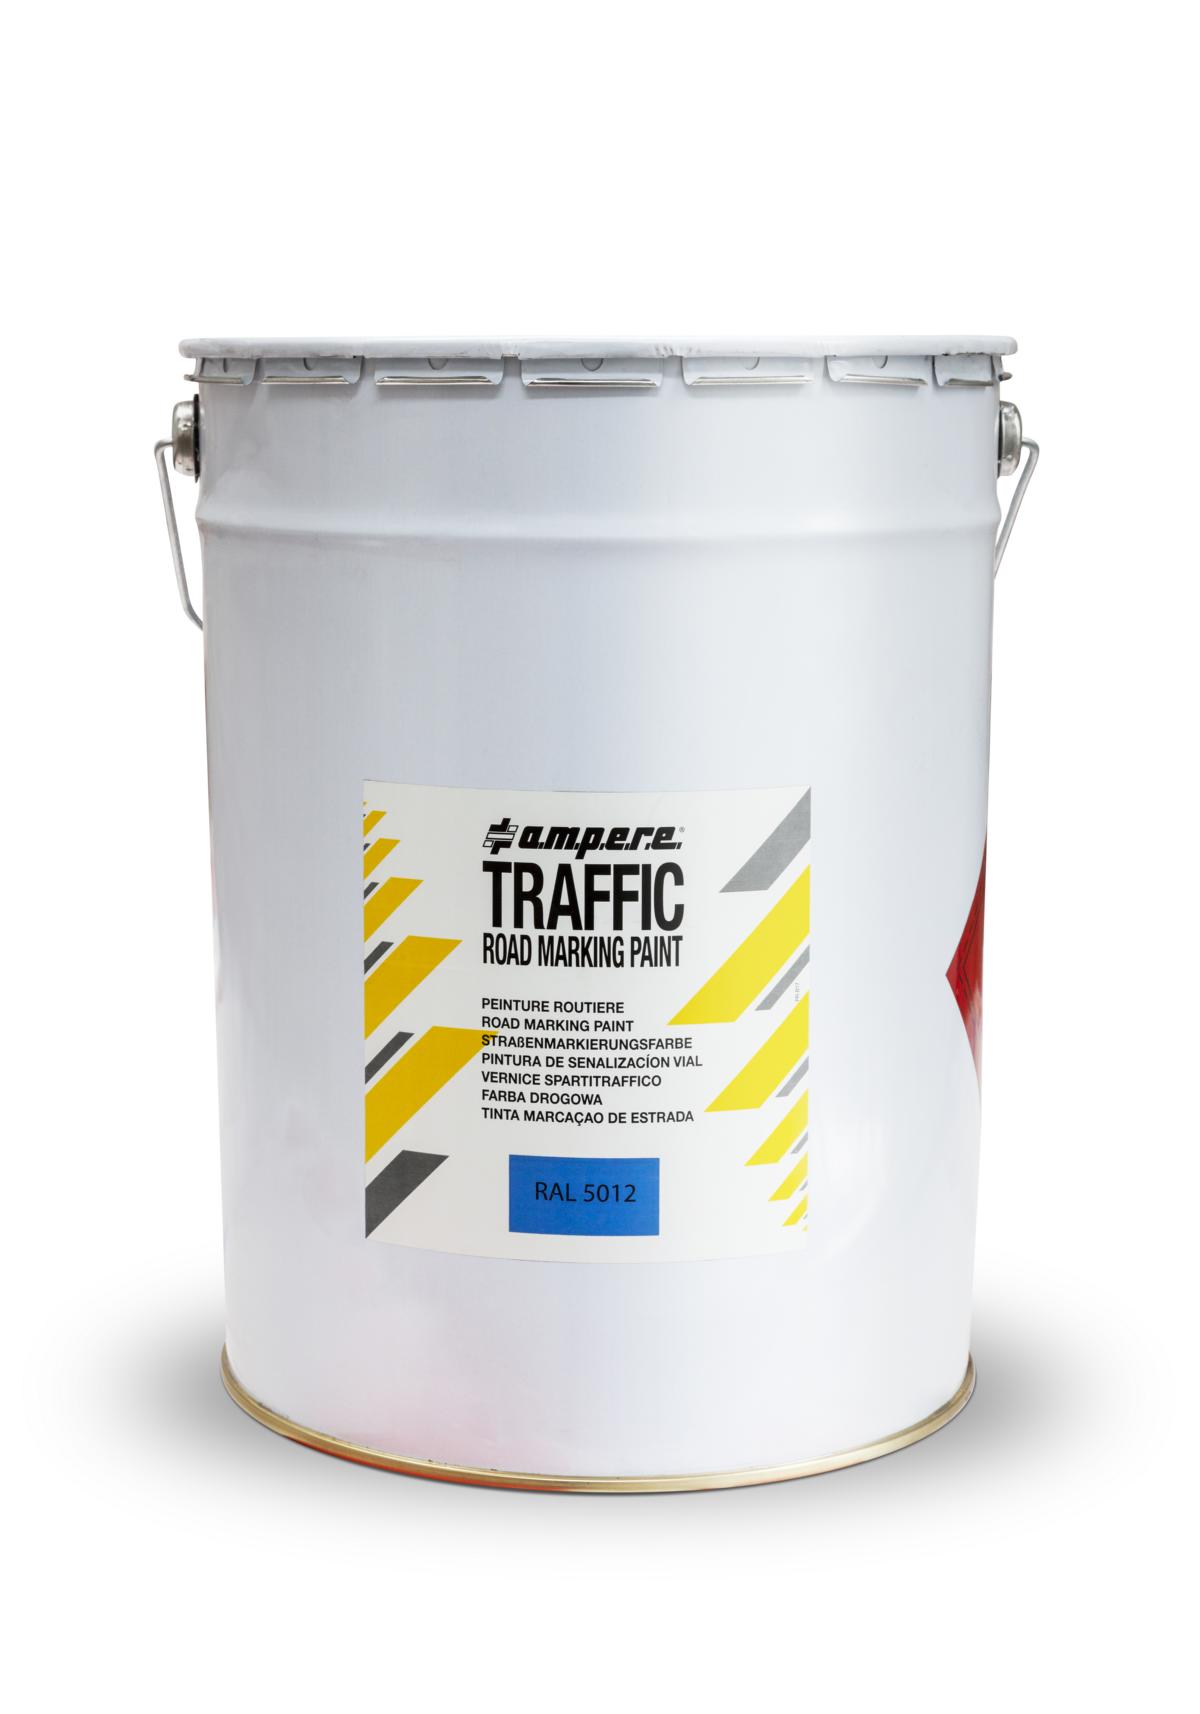 Traffic Road Marking Paint® Straßenmarkierungsfarbe, 25 kg, weiß